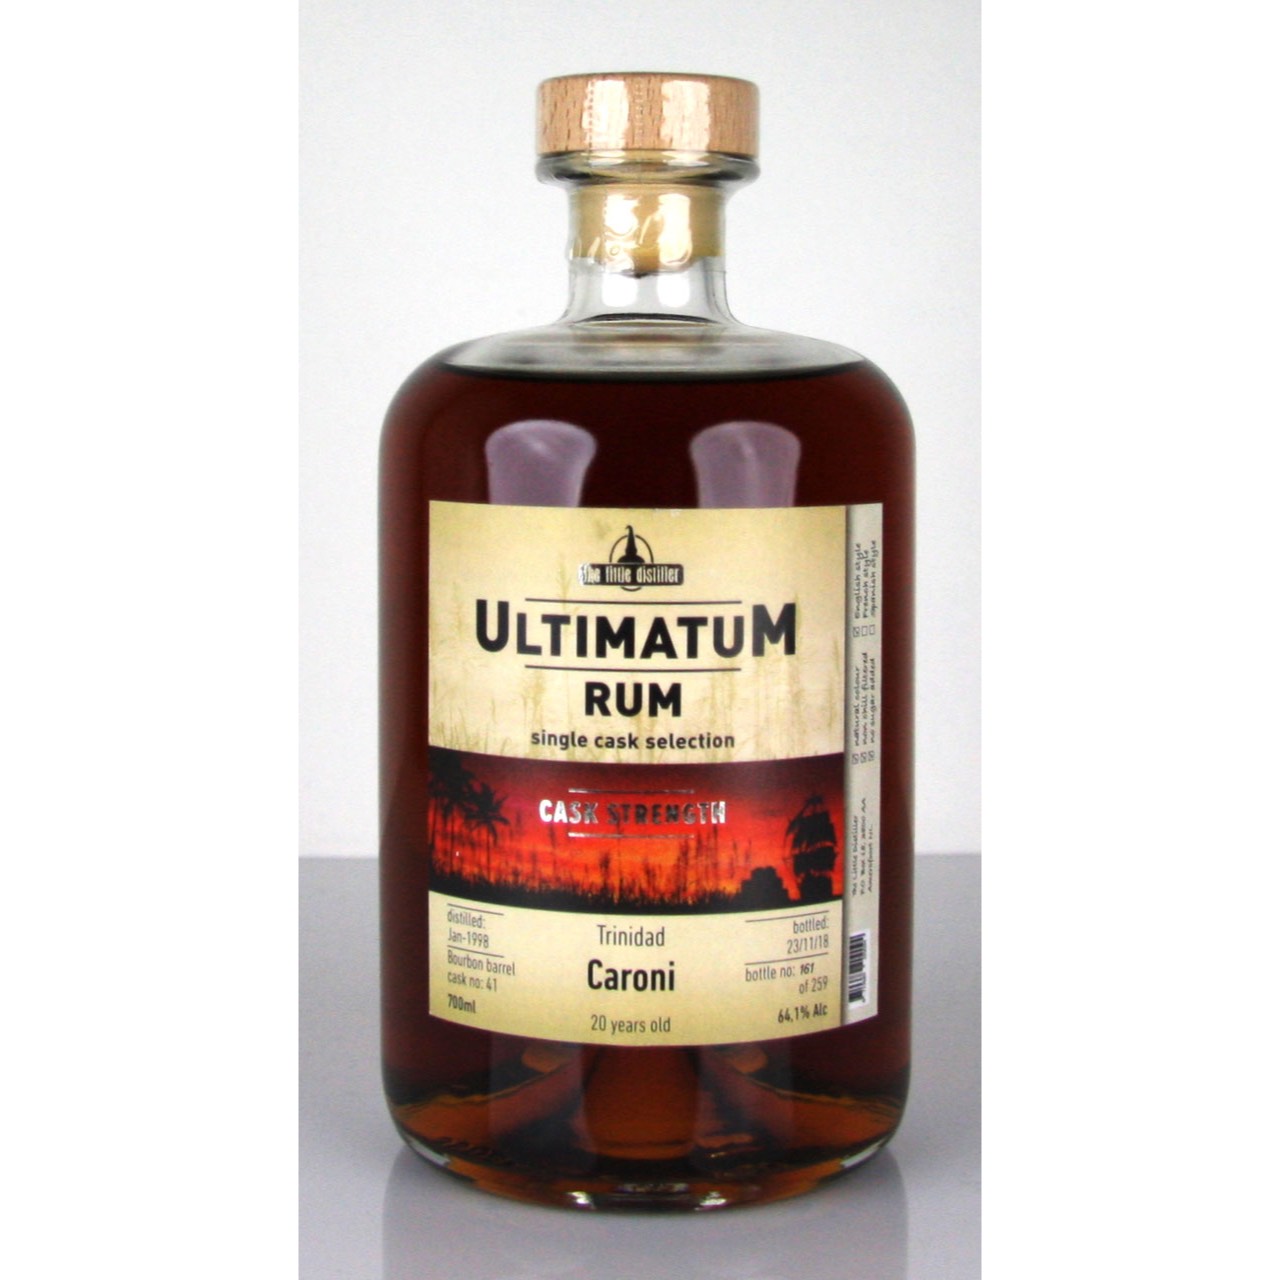 Bottle image of Ultimatum Rum HTR